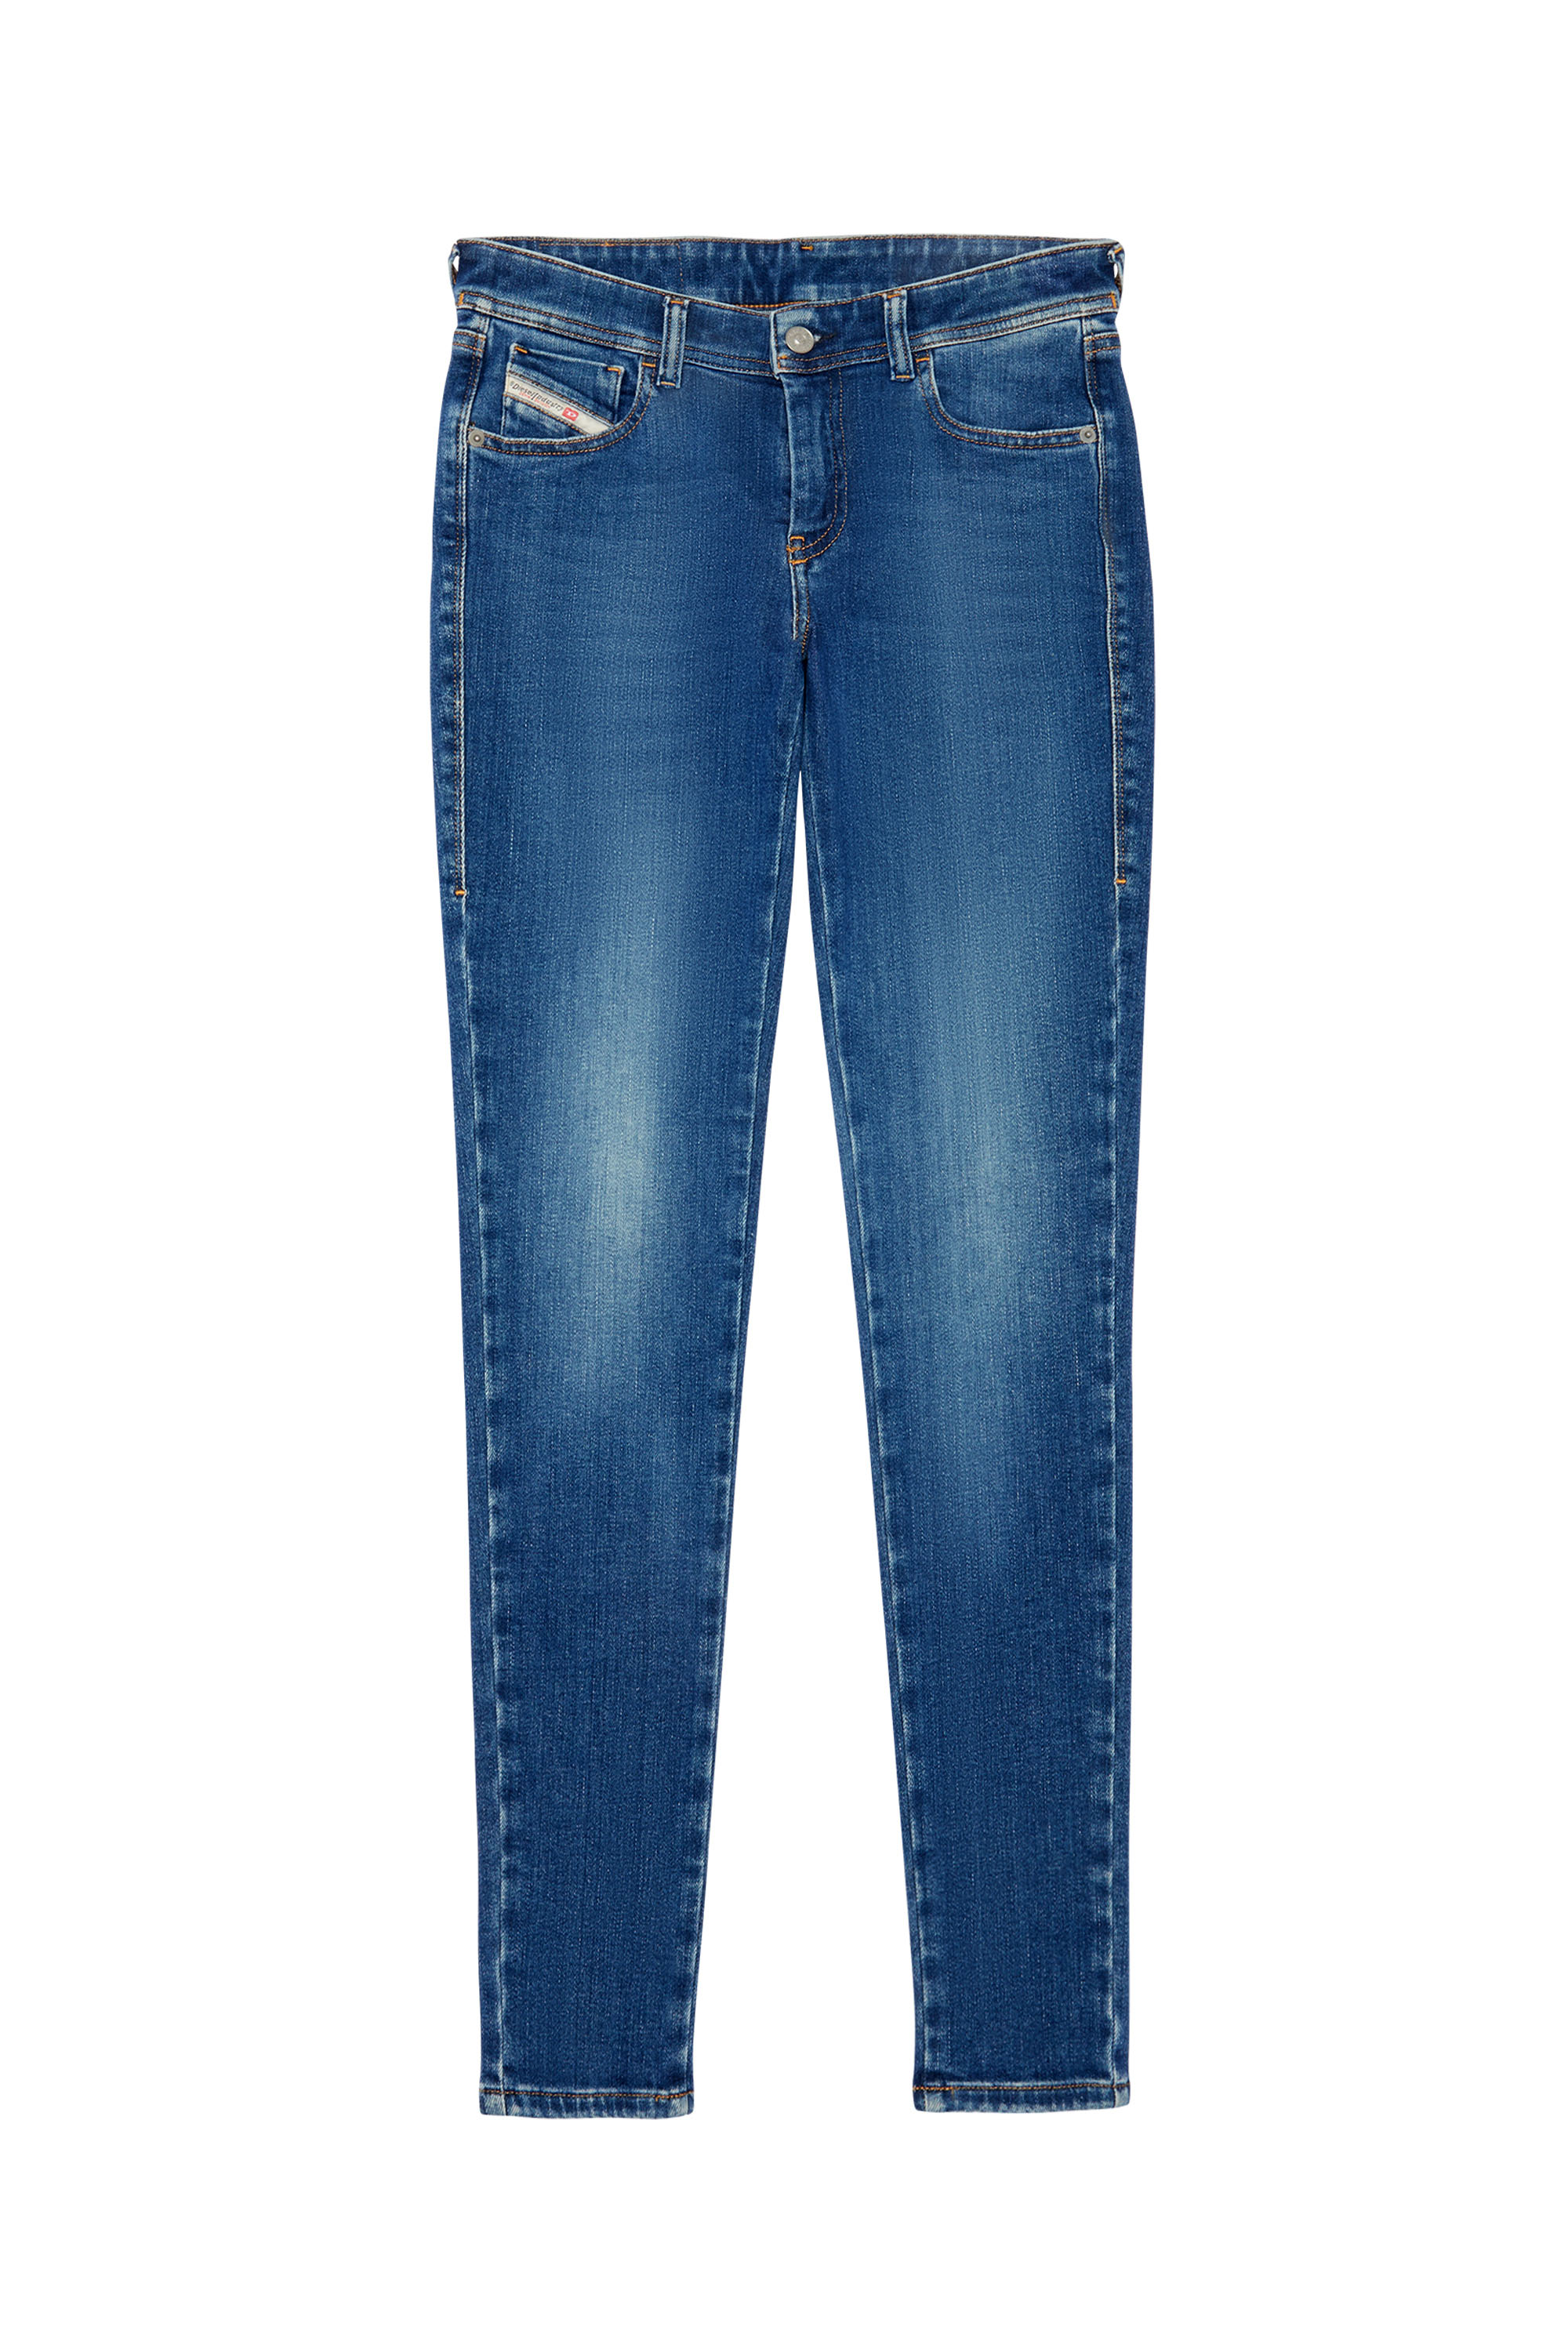 Super skinny Jeans 2018 Slandy-Low 09C21, Medium blue - Jeans